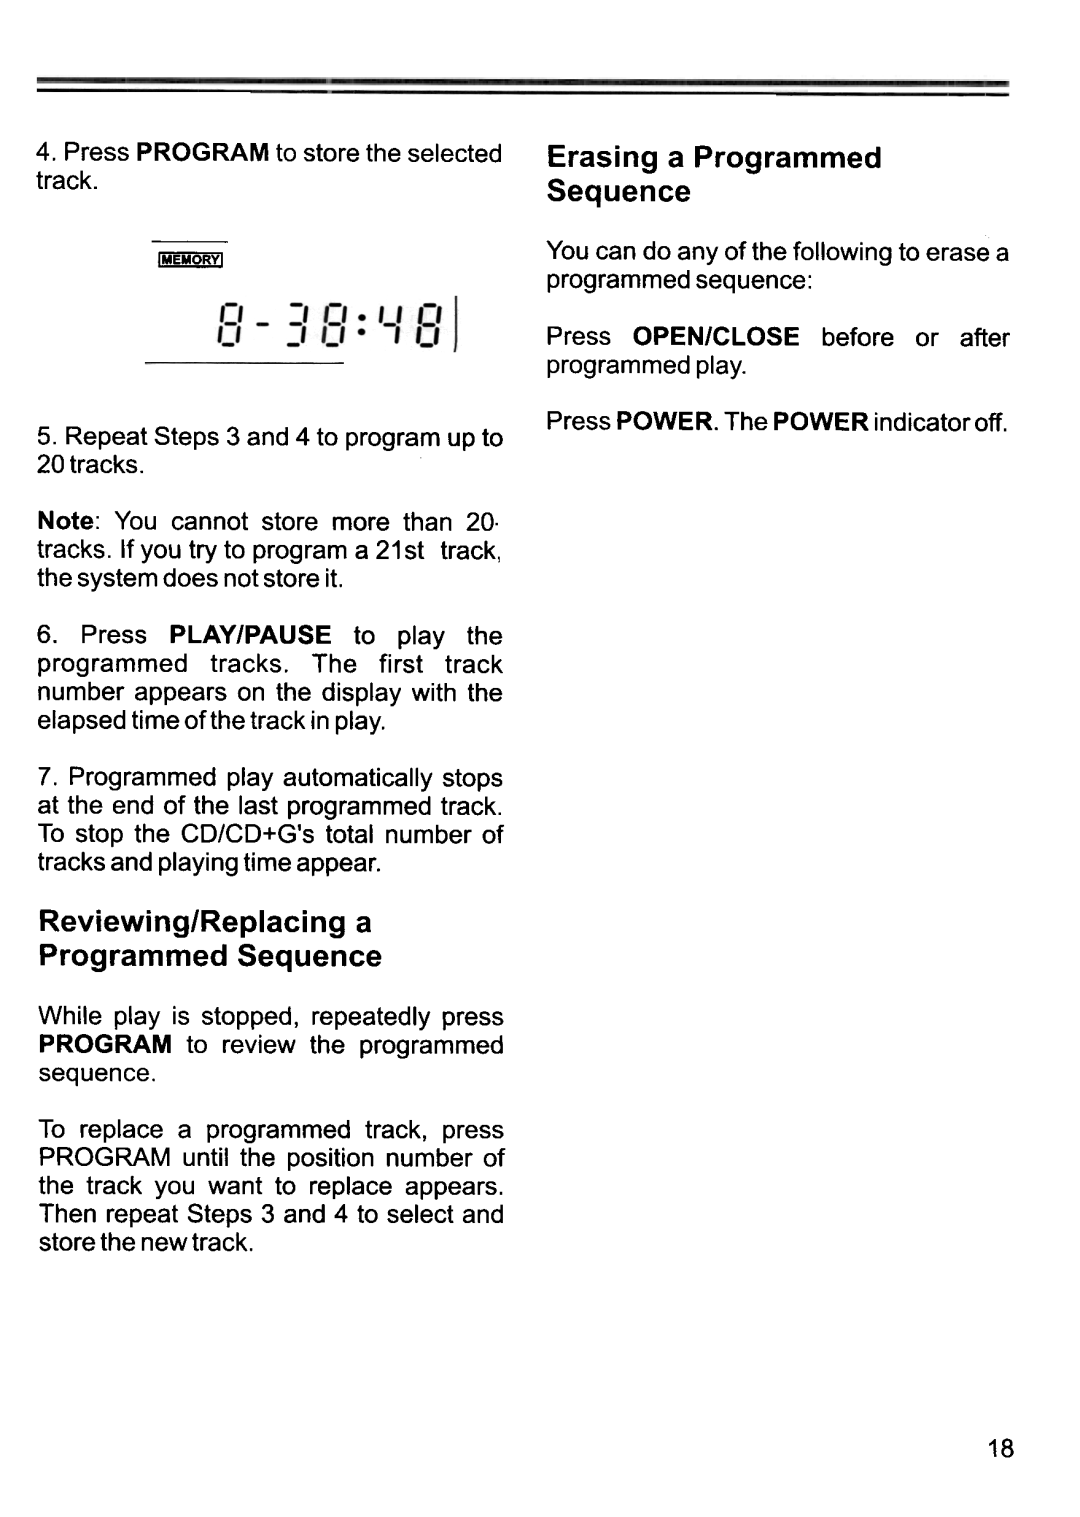 Memorex MKS 3001 manual Erasing a Programmed, Reviewing/Replacing a Programmed Sequence, sequence 